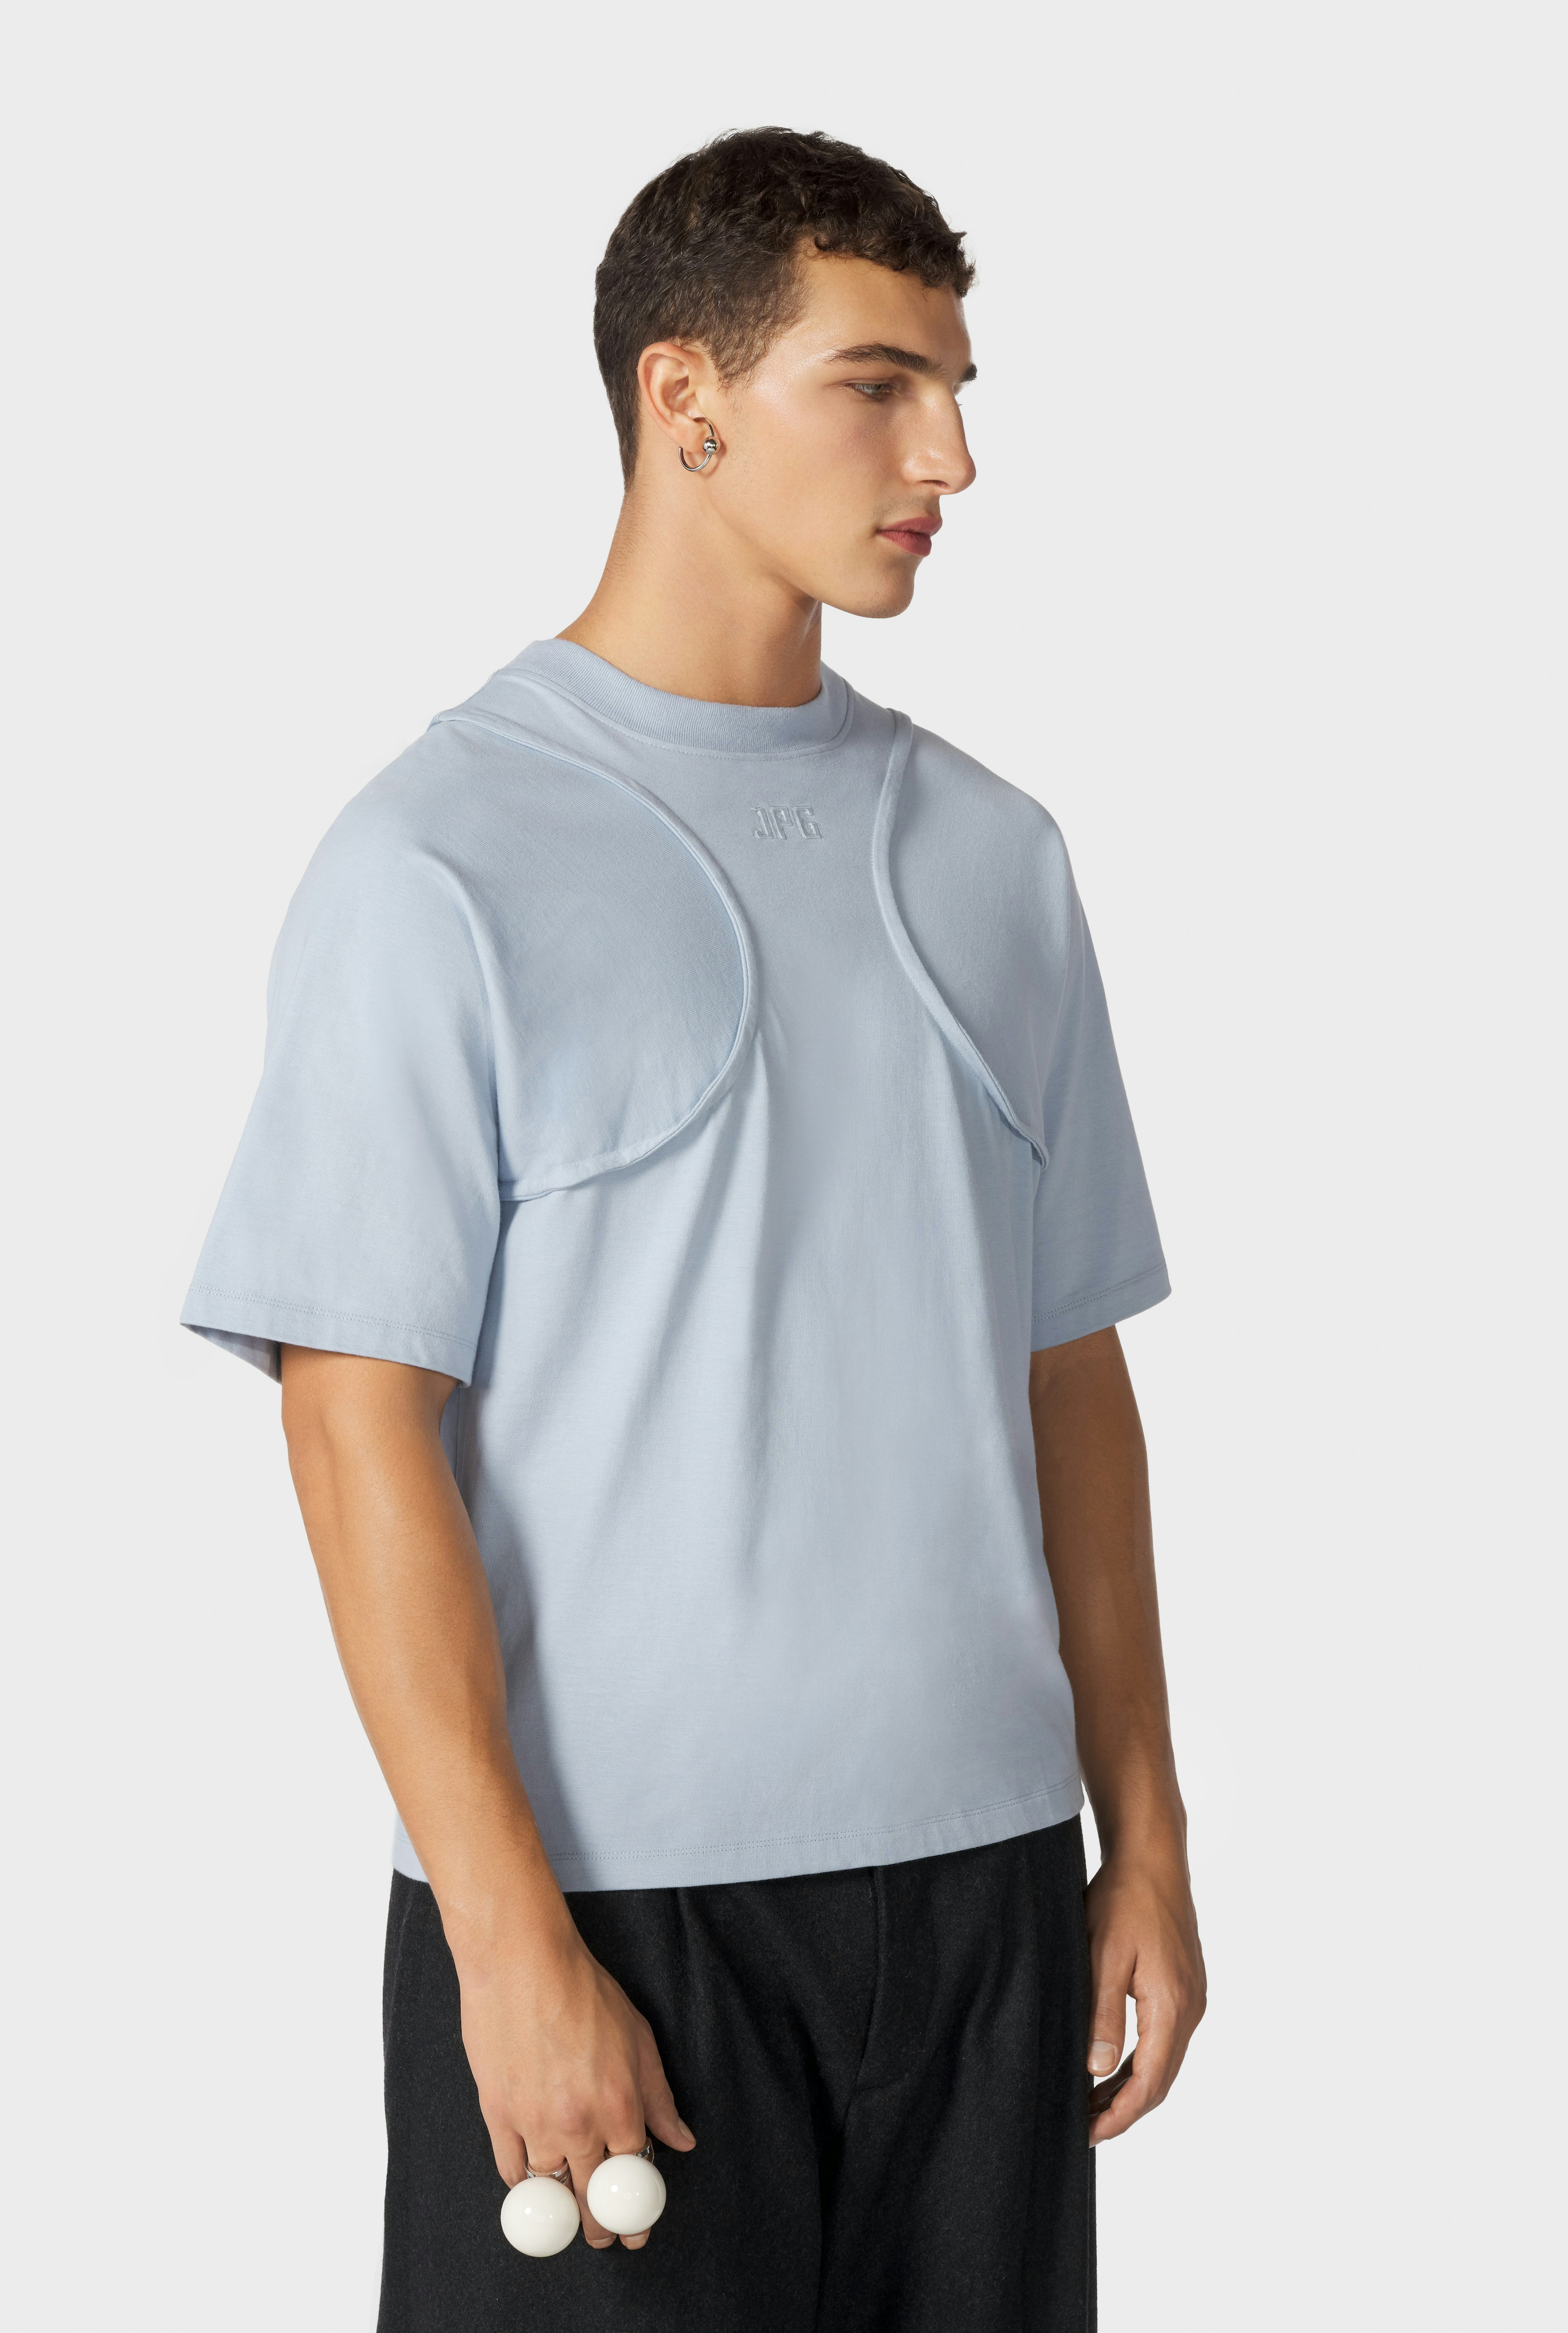 The Blue JPG T-Shirt